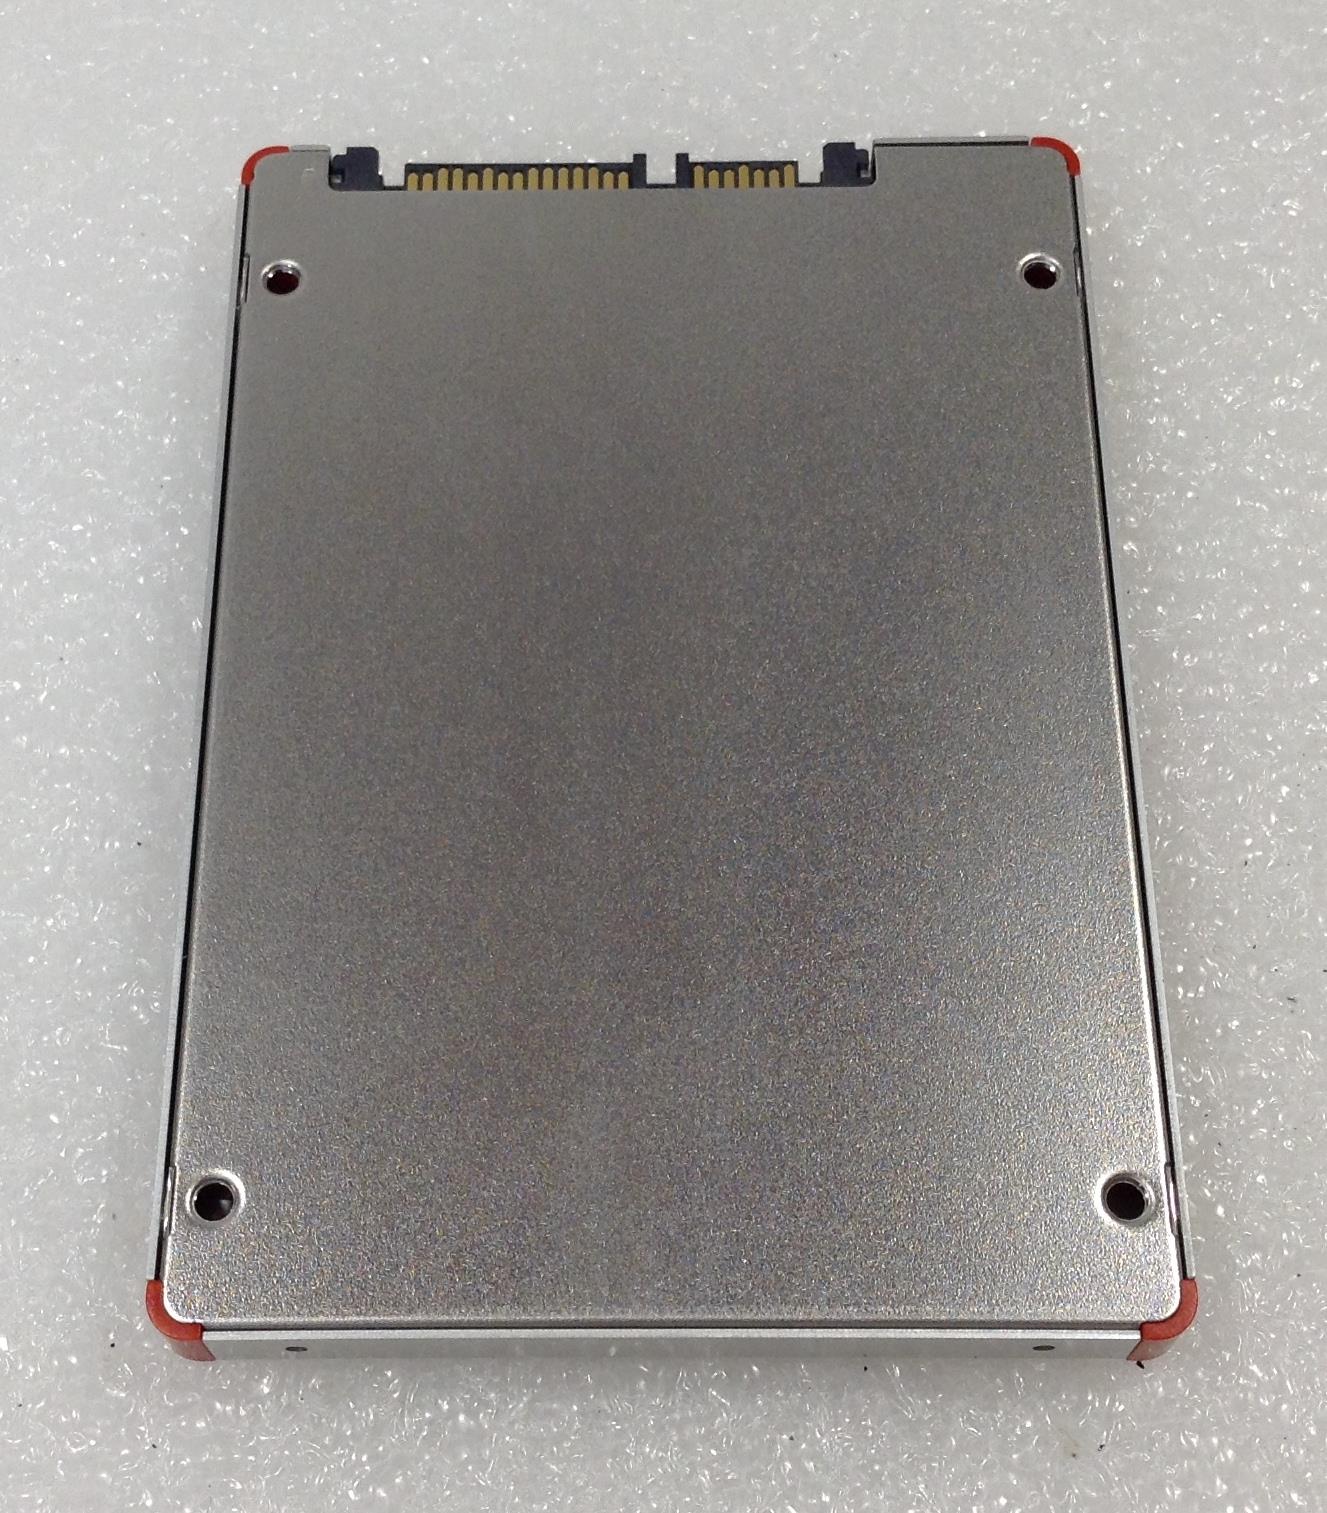 A102 - HP 910593-001 SK hynix HFS001T32TNF 1TB 2.5-inch SSD Generic Genuine NEW